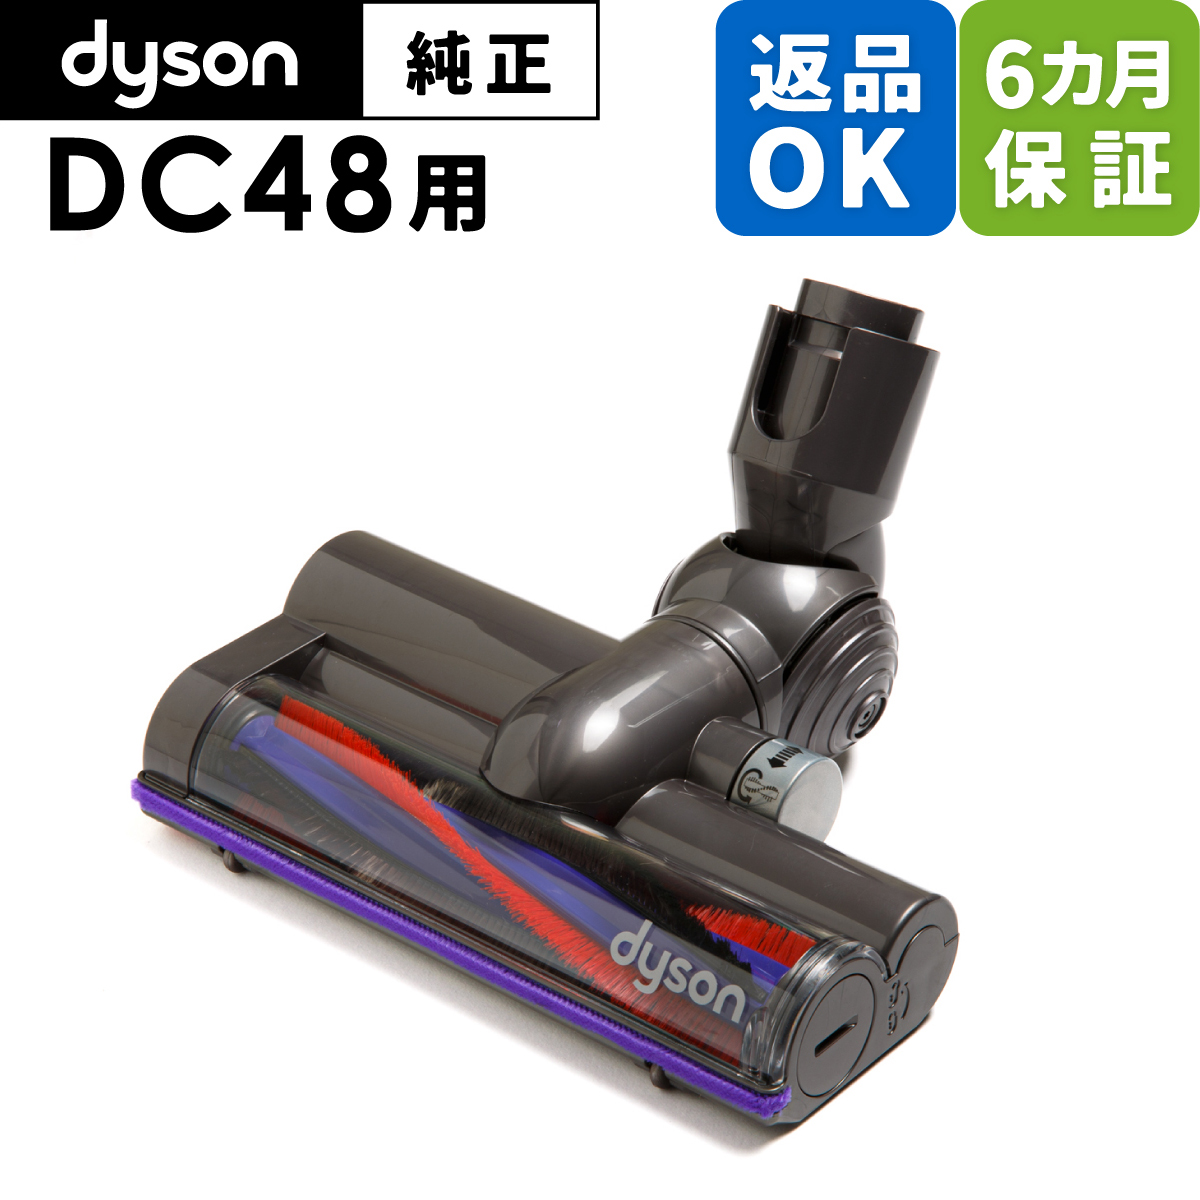 Dyson ダイソン 掃除機 純正 パーツ 返品OK 6カ月保証 タービンヘッド DC48 タービンヘッドタイプのみ適合 モデル 部品 交換